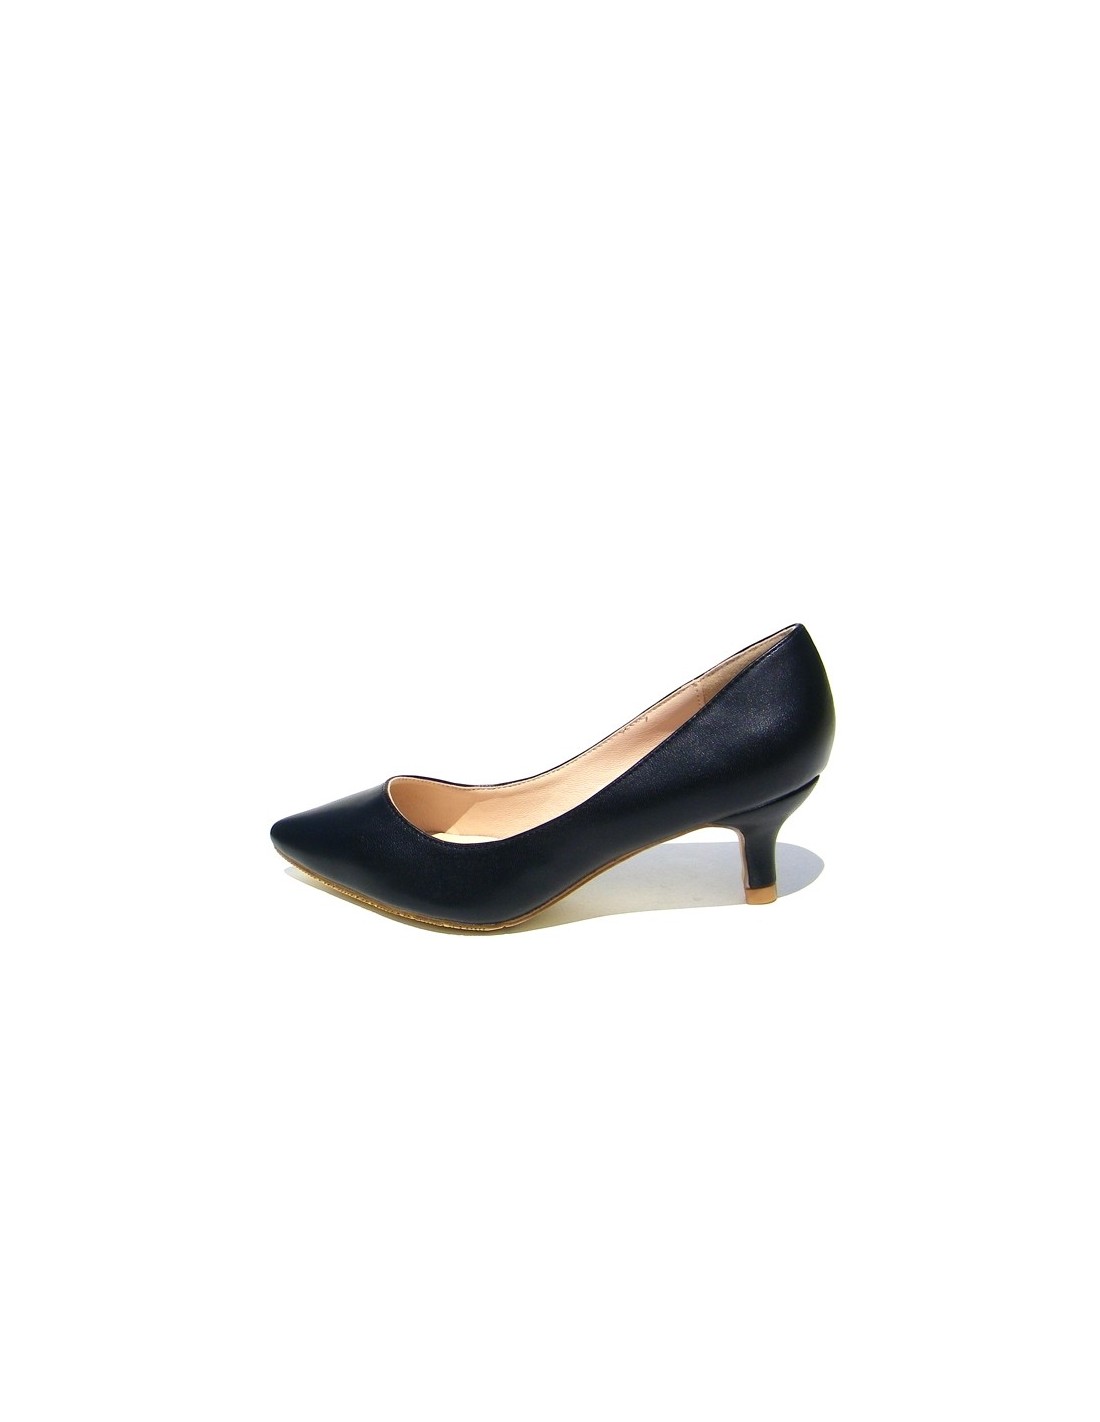 Black pumps 5 centimeters heels